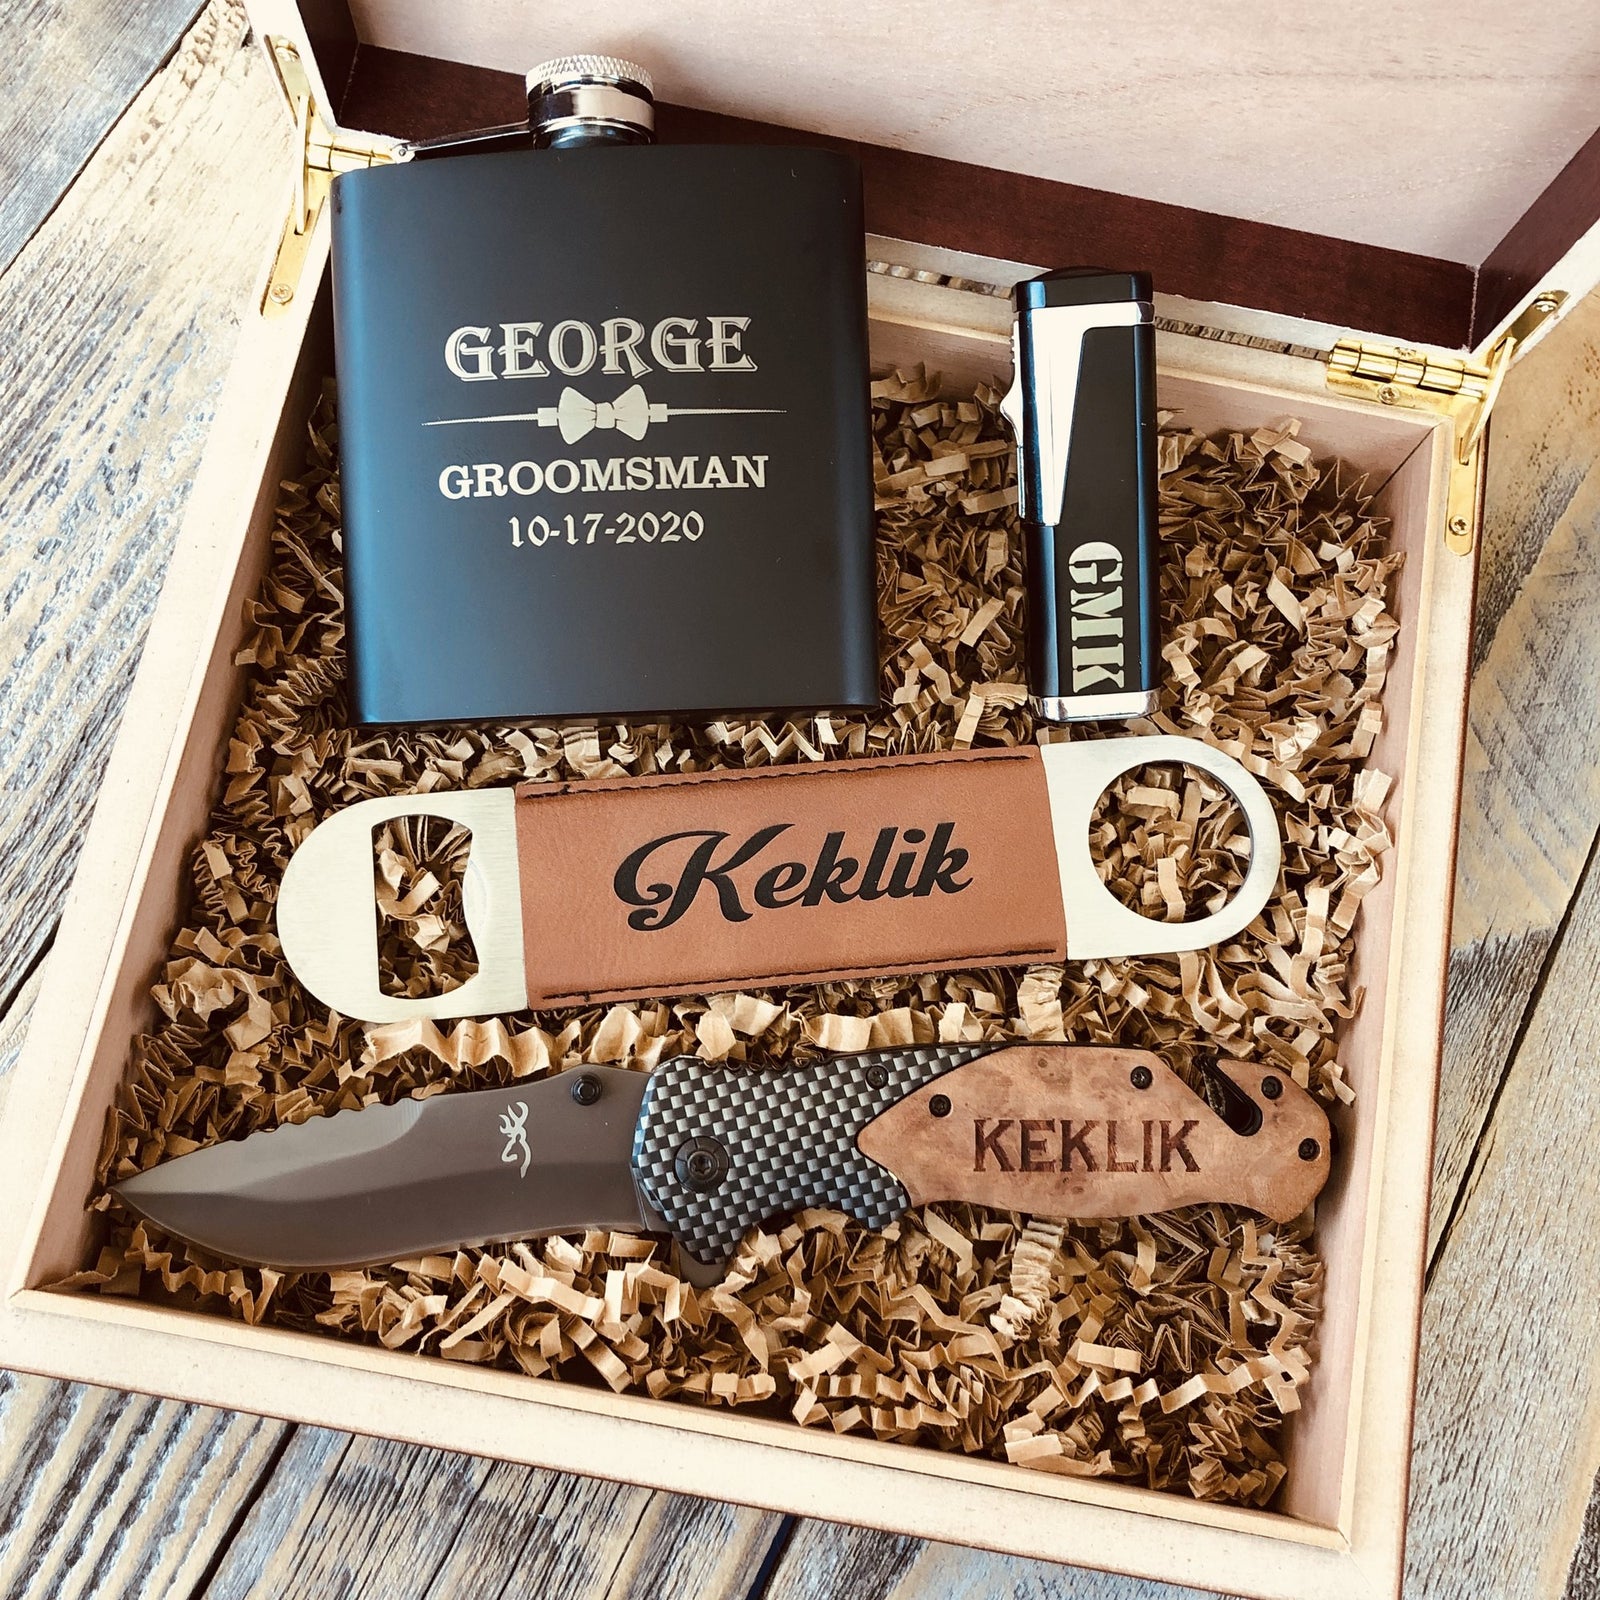 Personalized Cigar Set, Gift For Men, Husband Cigar Case, Engraved Gift,  Christmas Cigar Gift, Luxury Cigar Travel Case, Groomsmen Gift Case